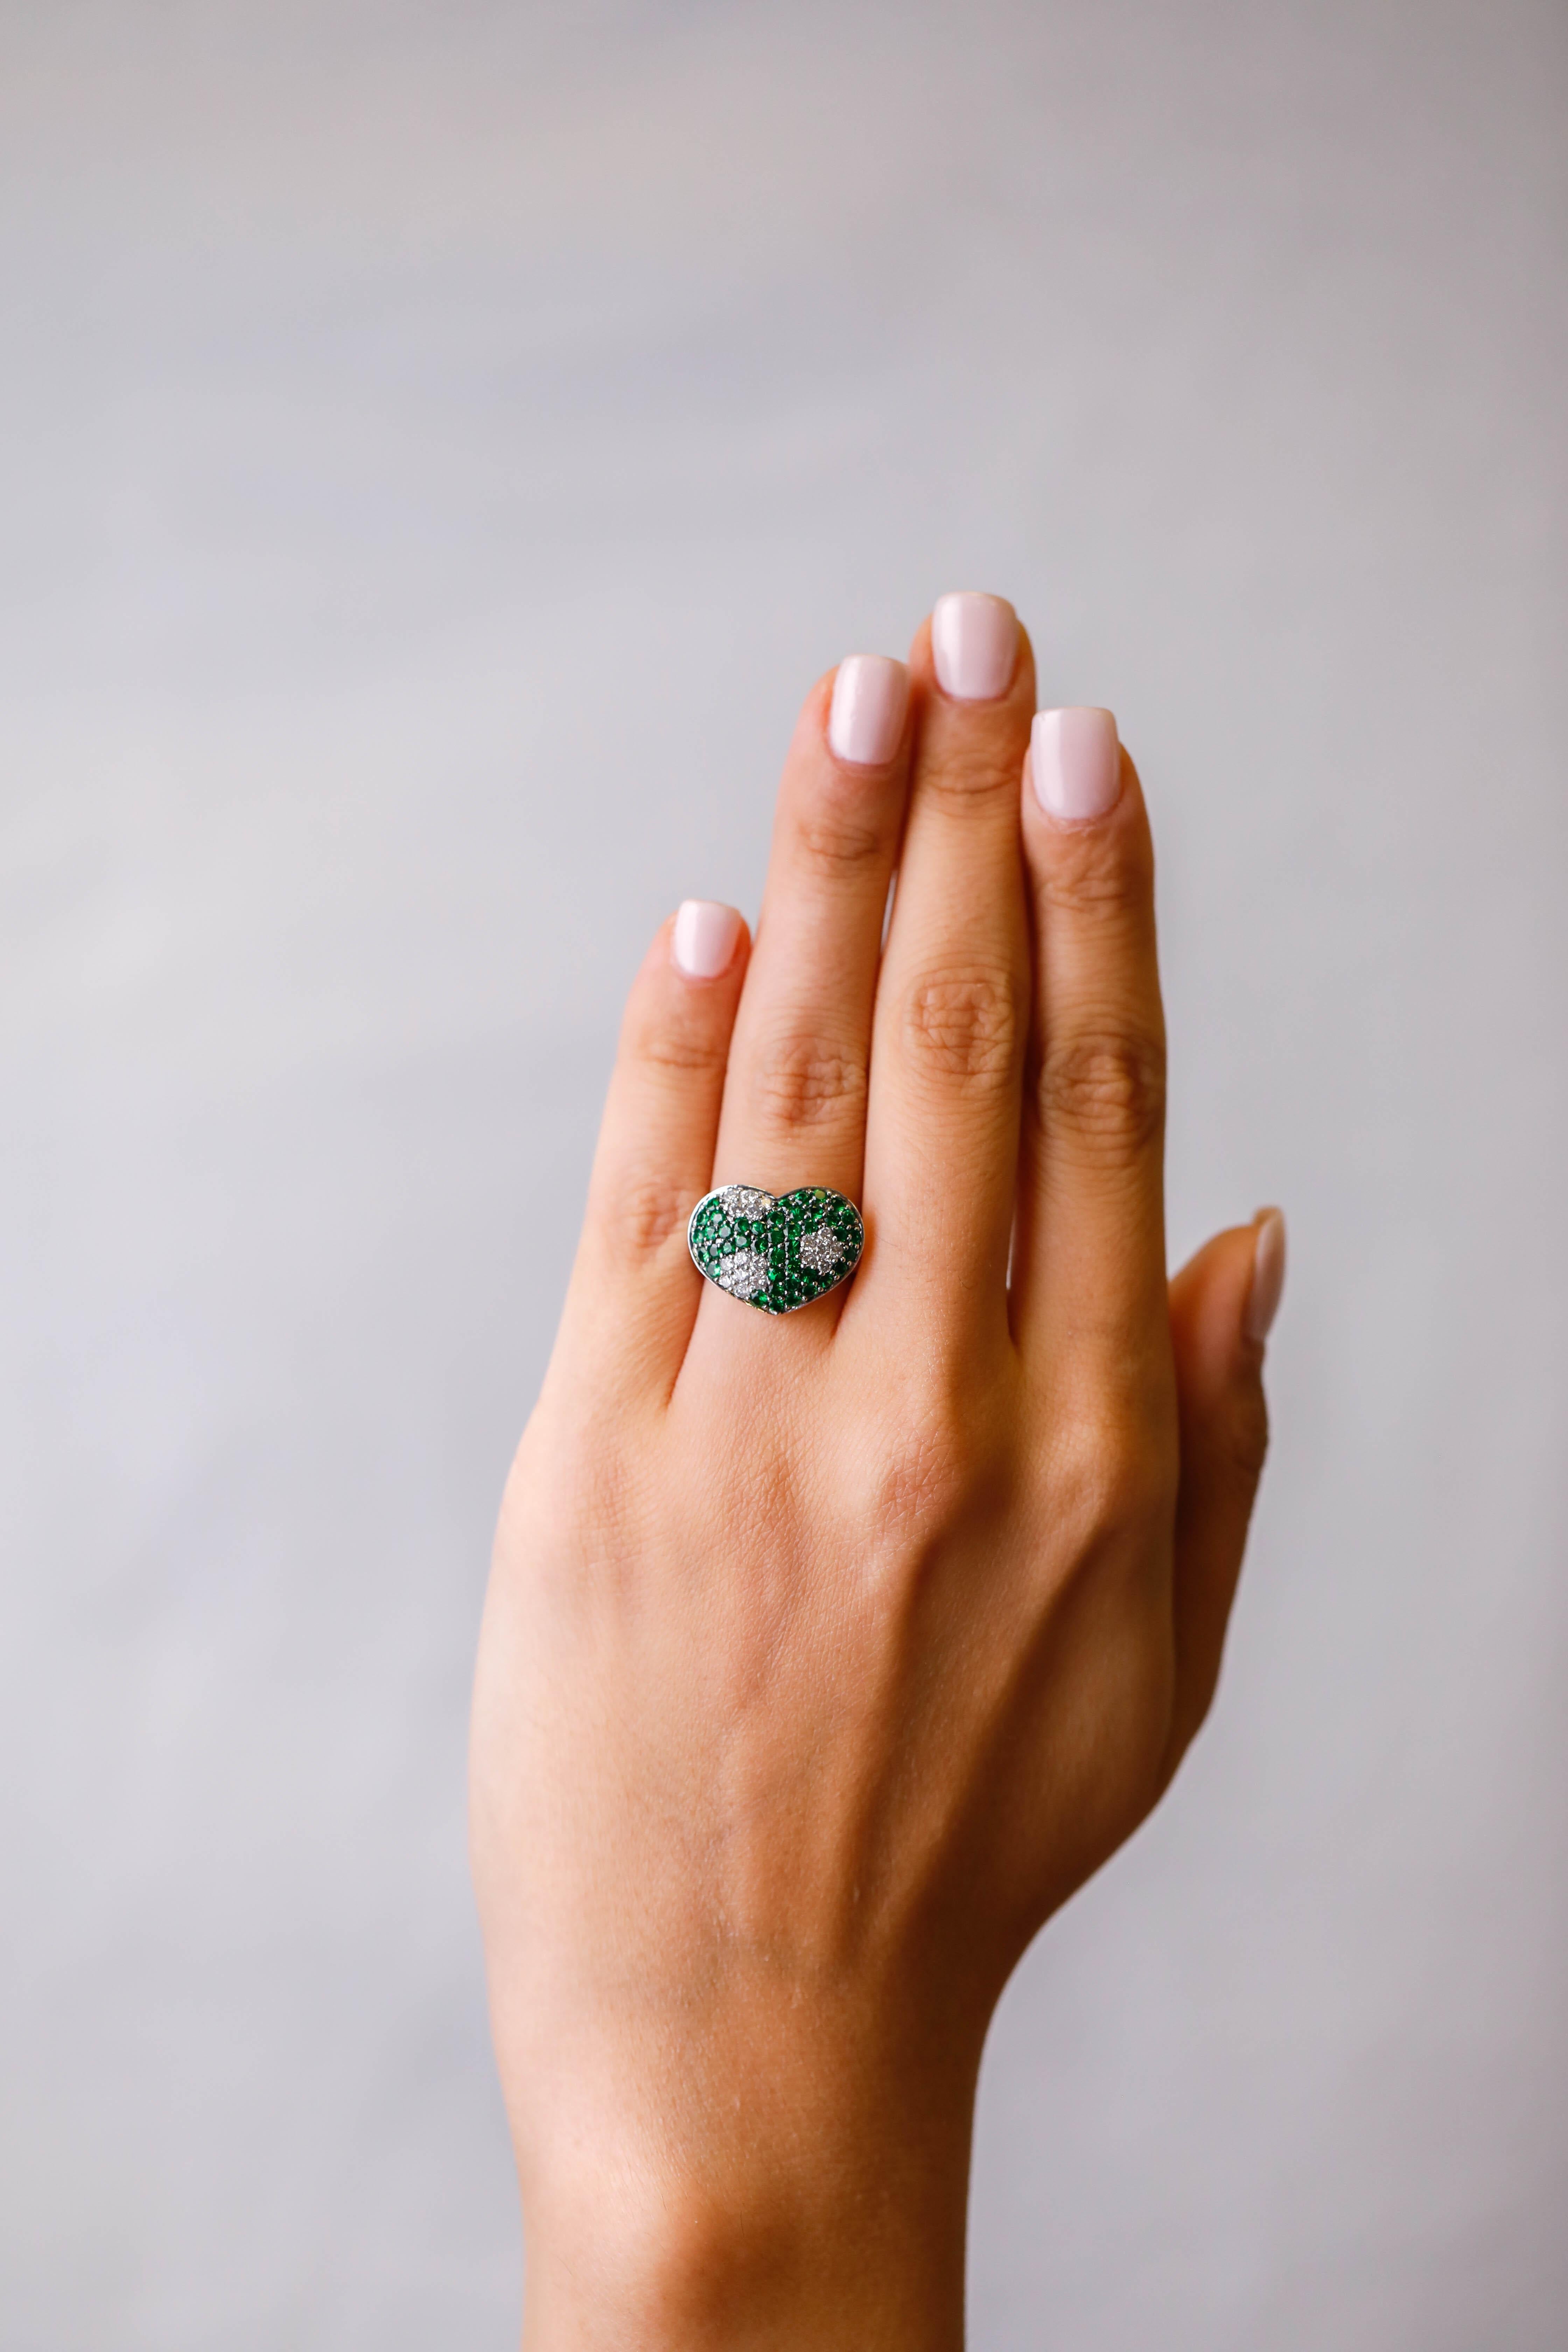 Round Cut Heart shaped Green Sapphire diamond accent Cocktail Ring 14 karat White Gold